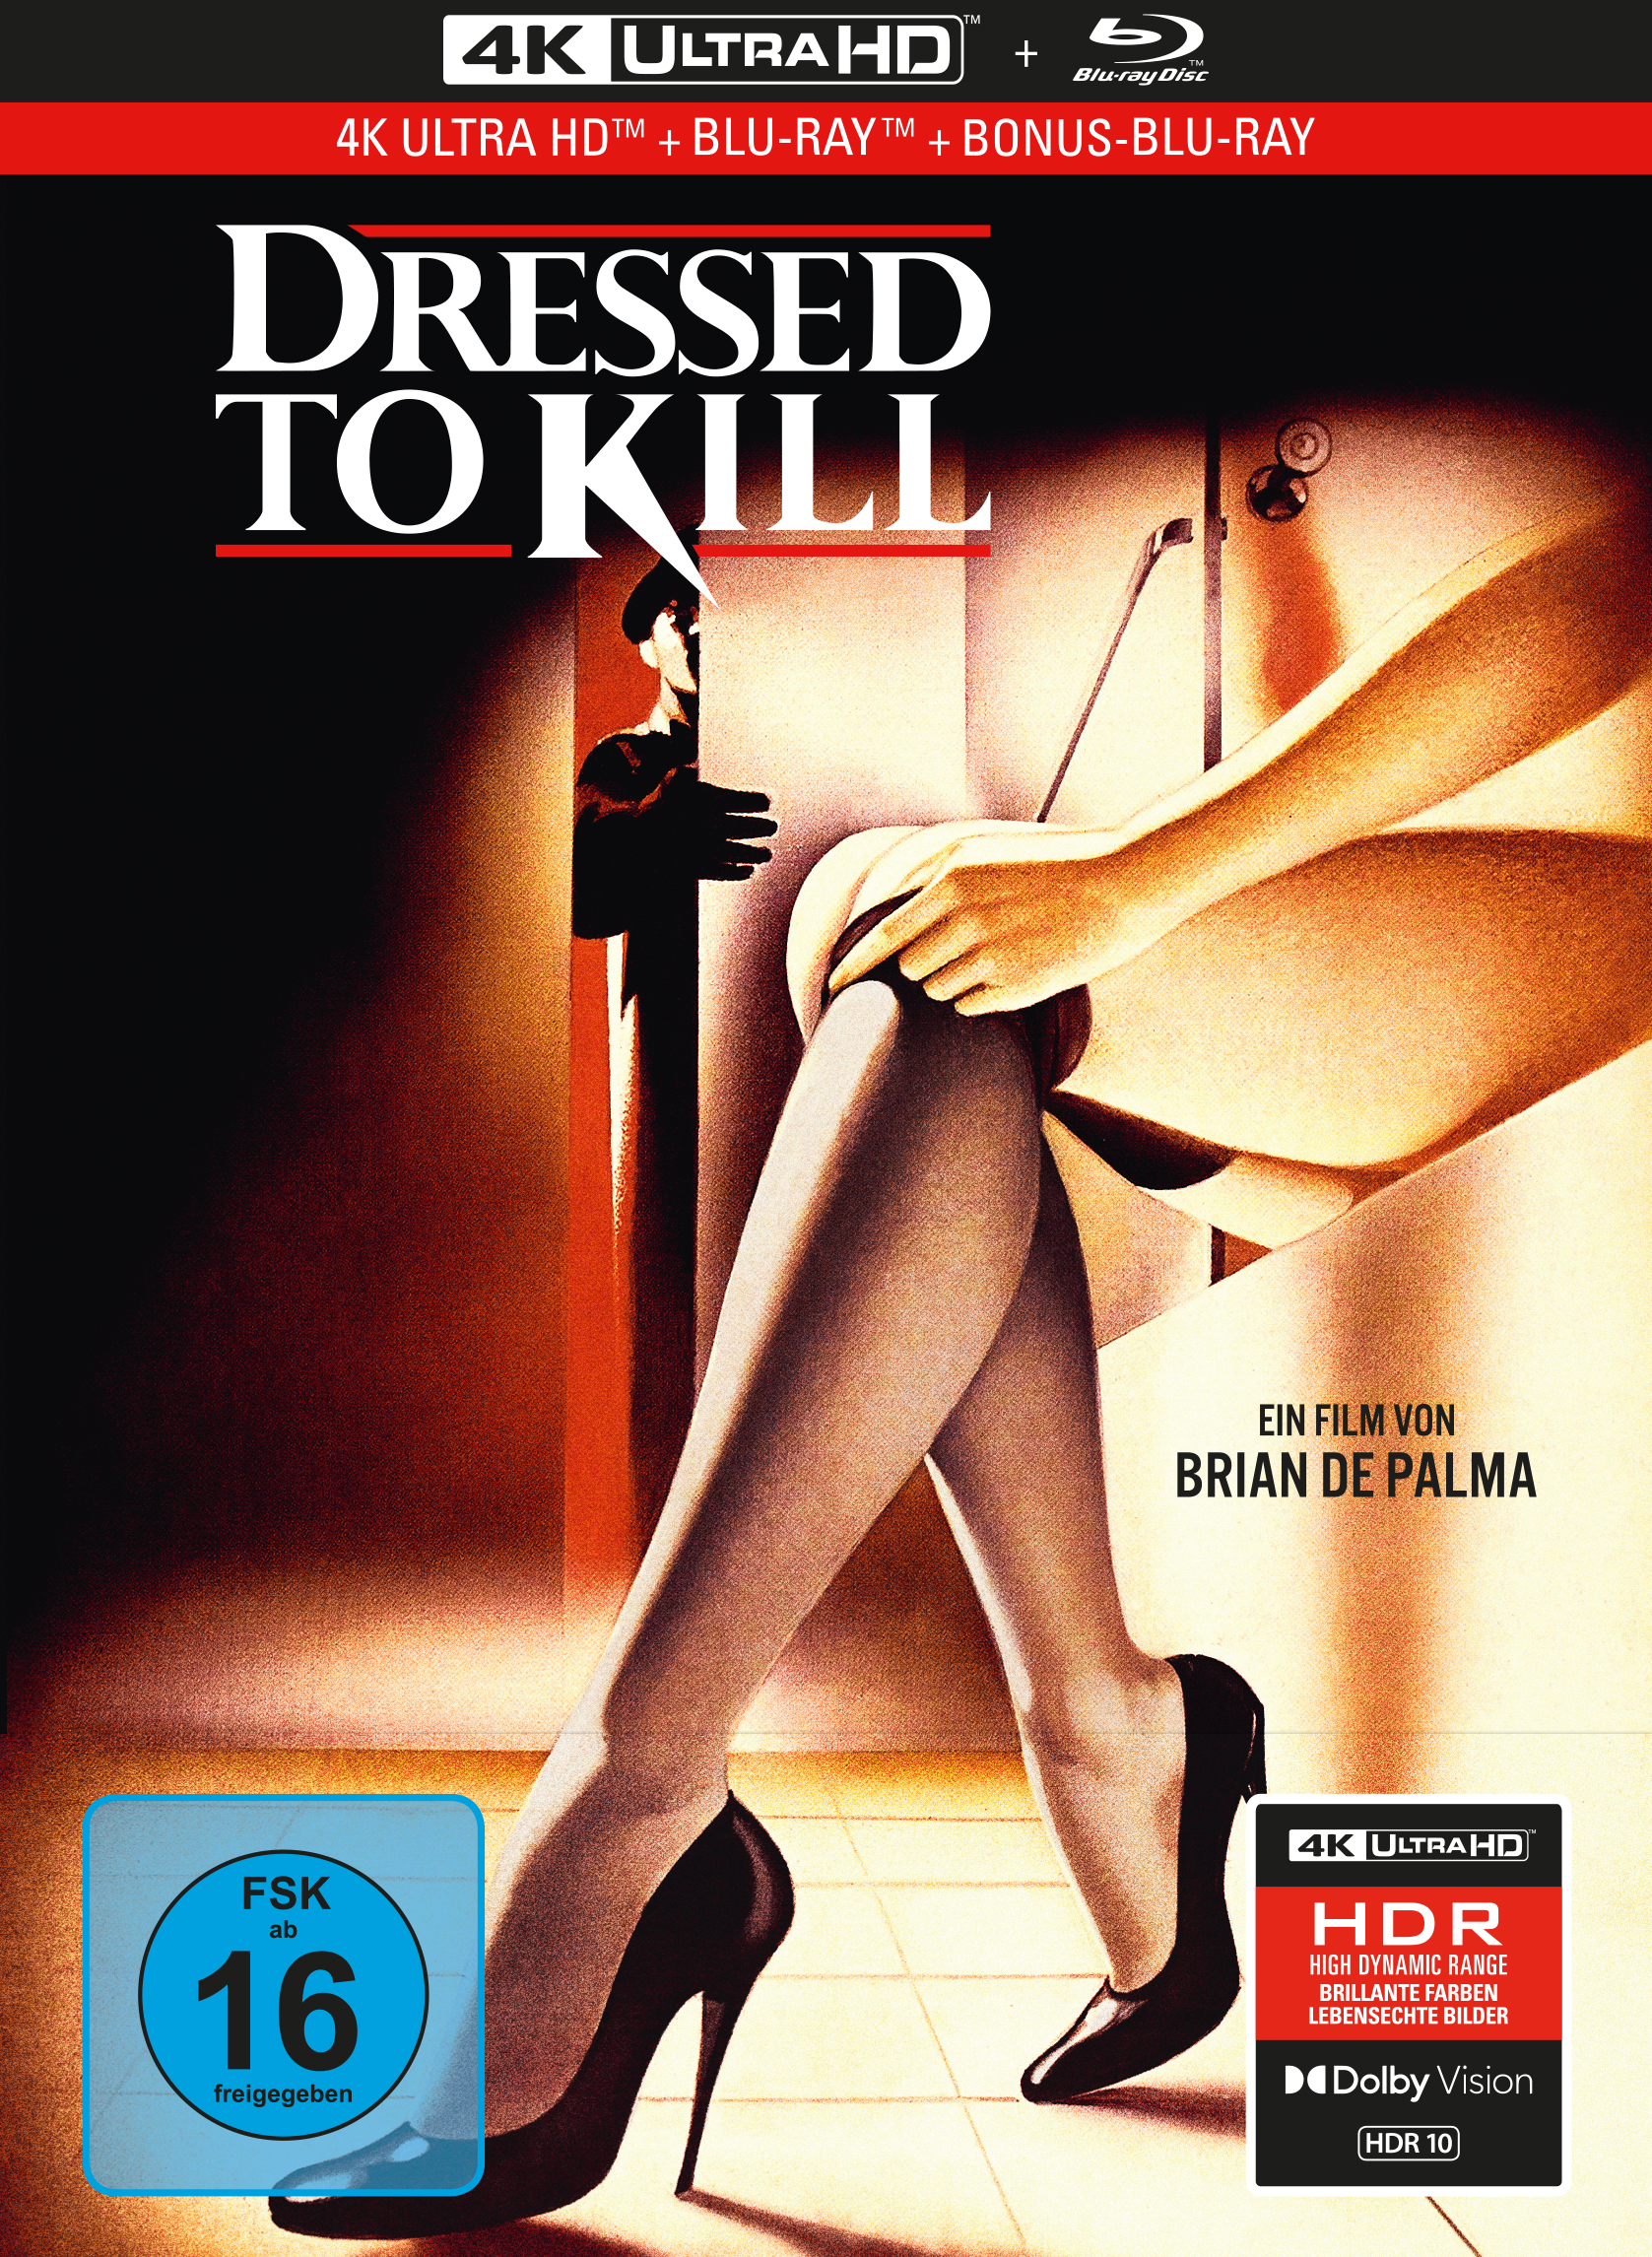 Dressed to Kill - 3-Disc Limited Collector's Edition im Mediabook (UHD-Blu-ray + Blu-ray + Bonus-Blu-ray)